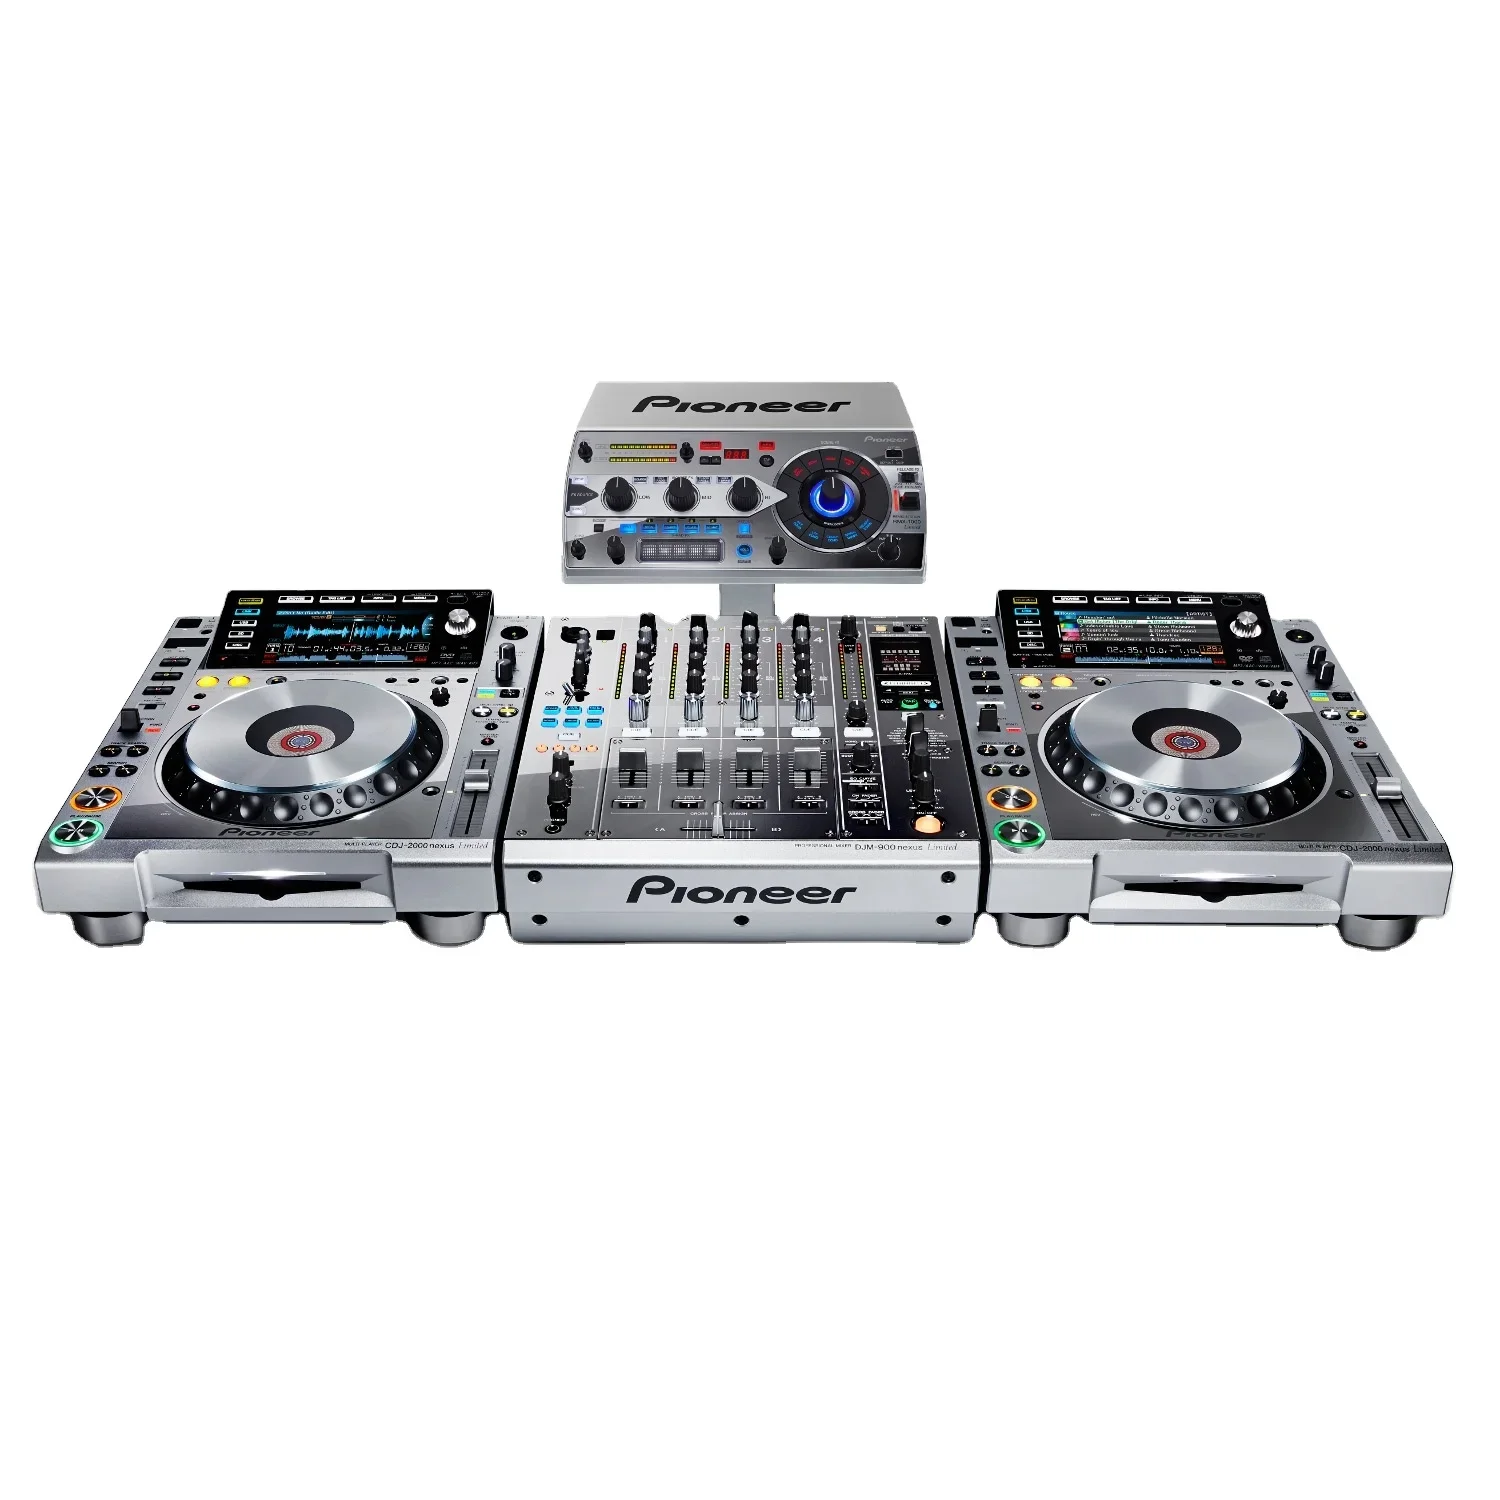 

SUMMER SALES DISCOUNT ON Brand New Pio-neers DJ XDJ-RX2 Professional DJ System Mixer Hot